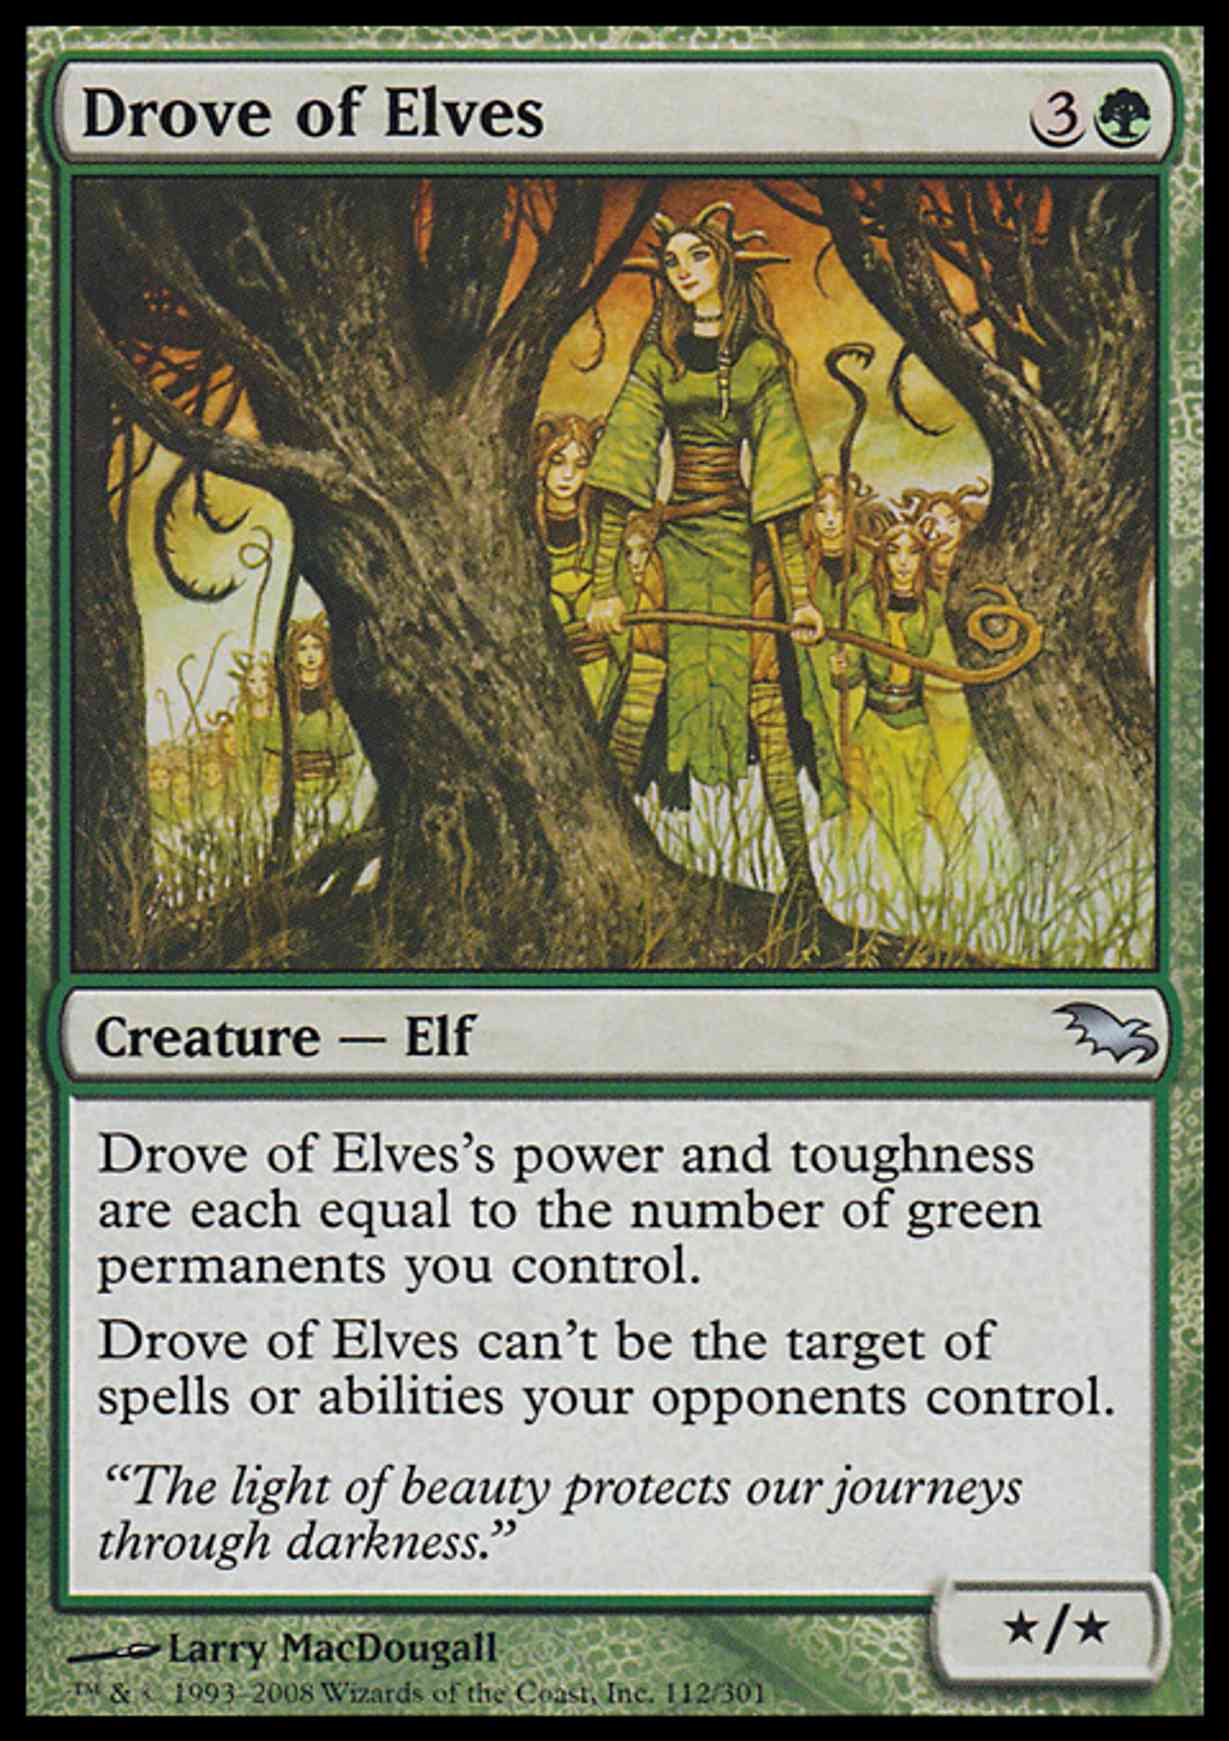 Drove of Elves magic card front